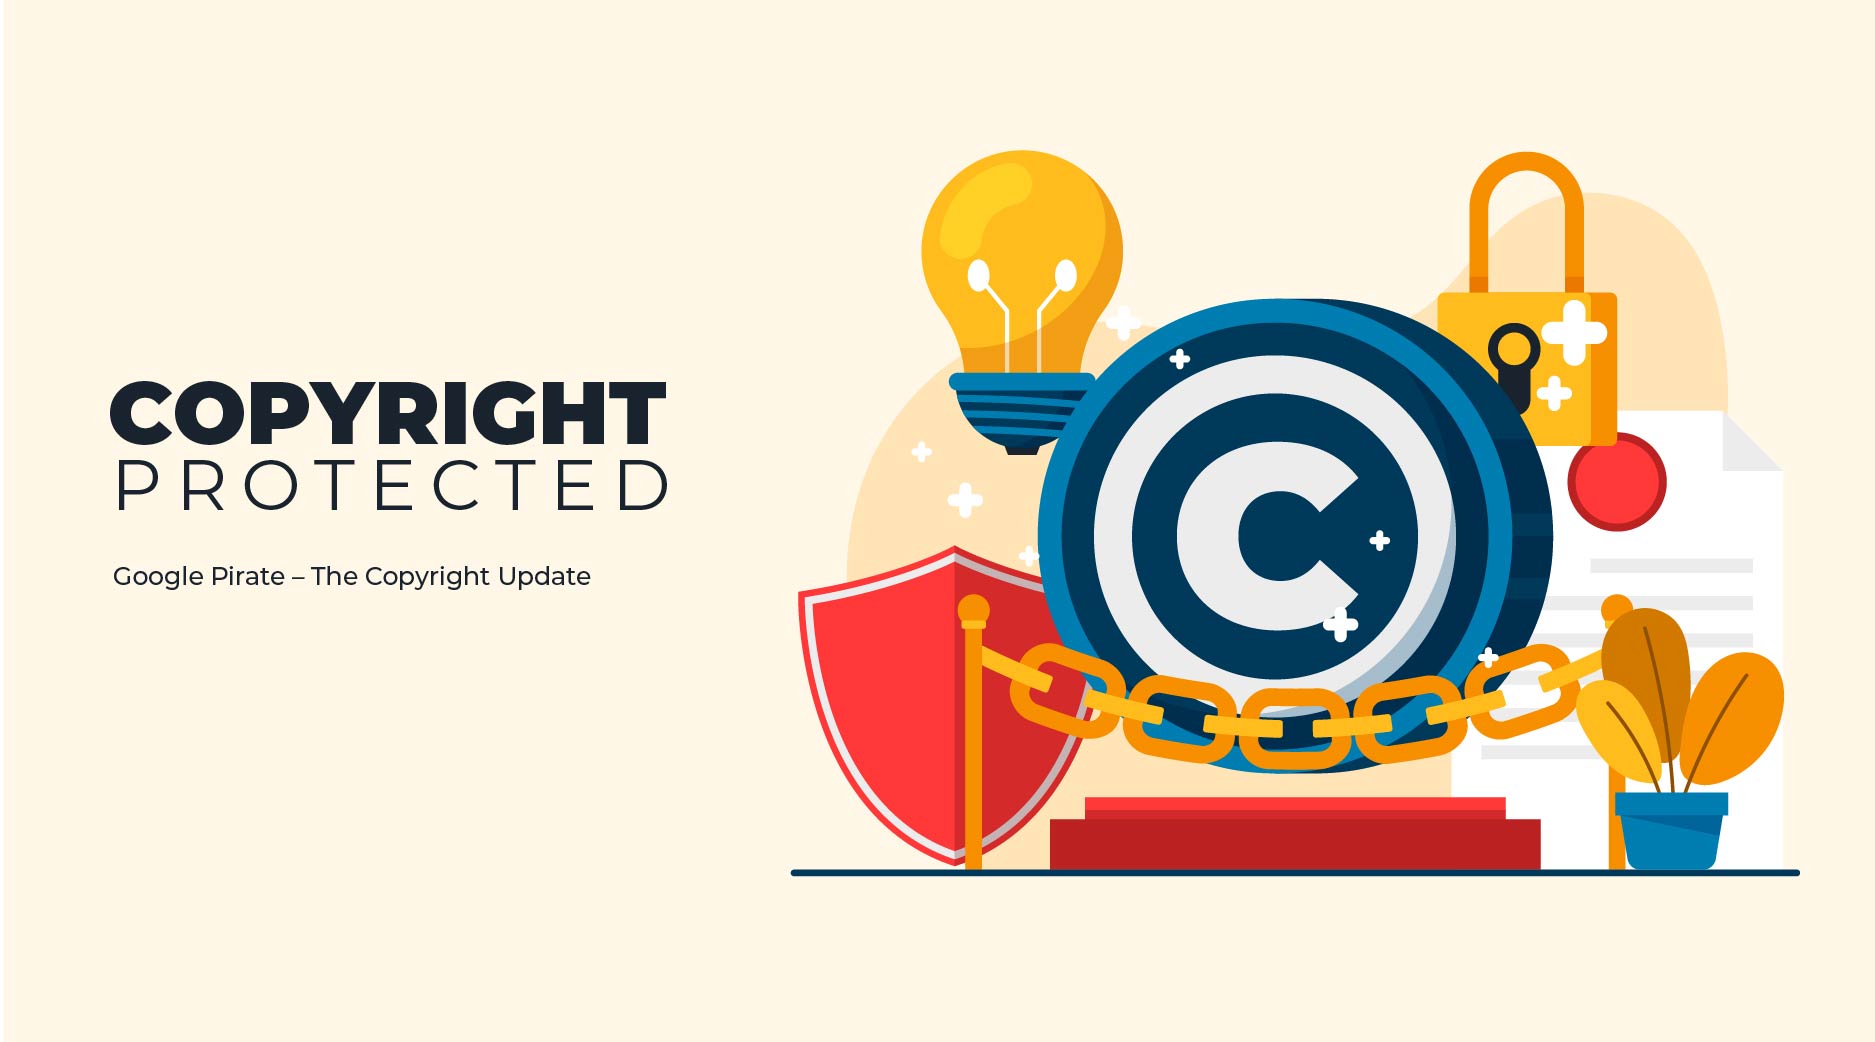 Google Pirate – The Copyright Update